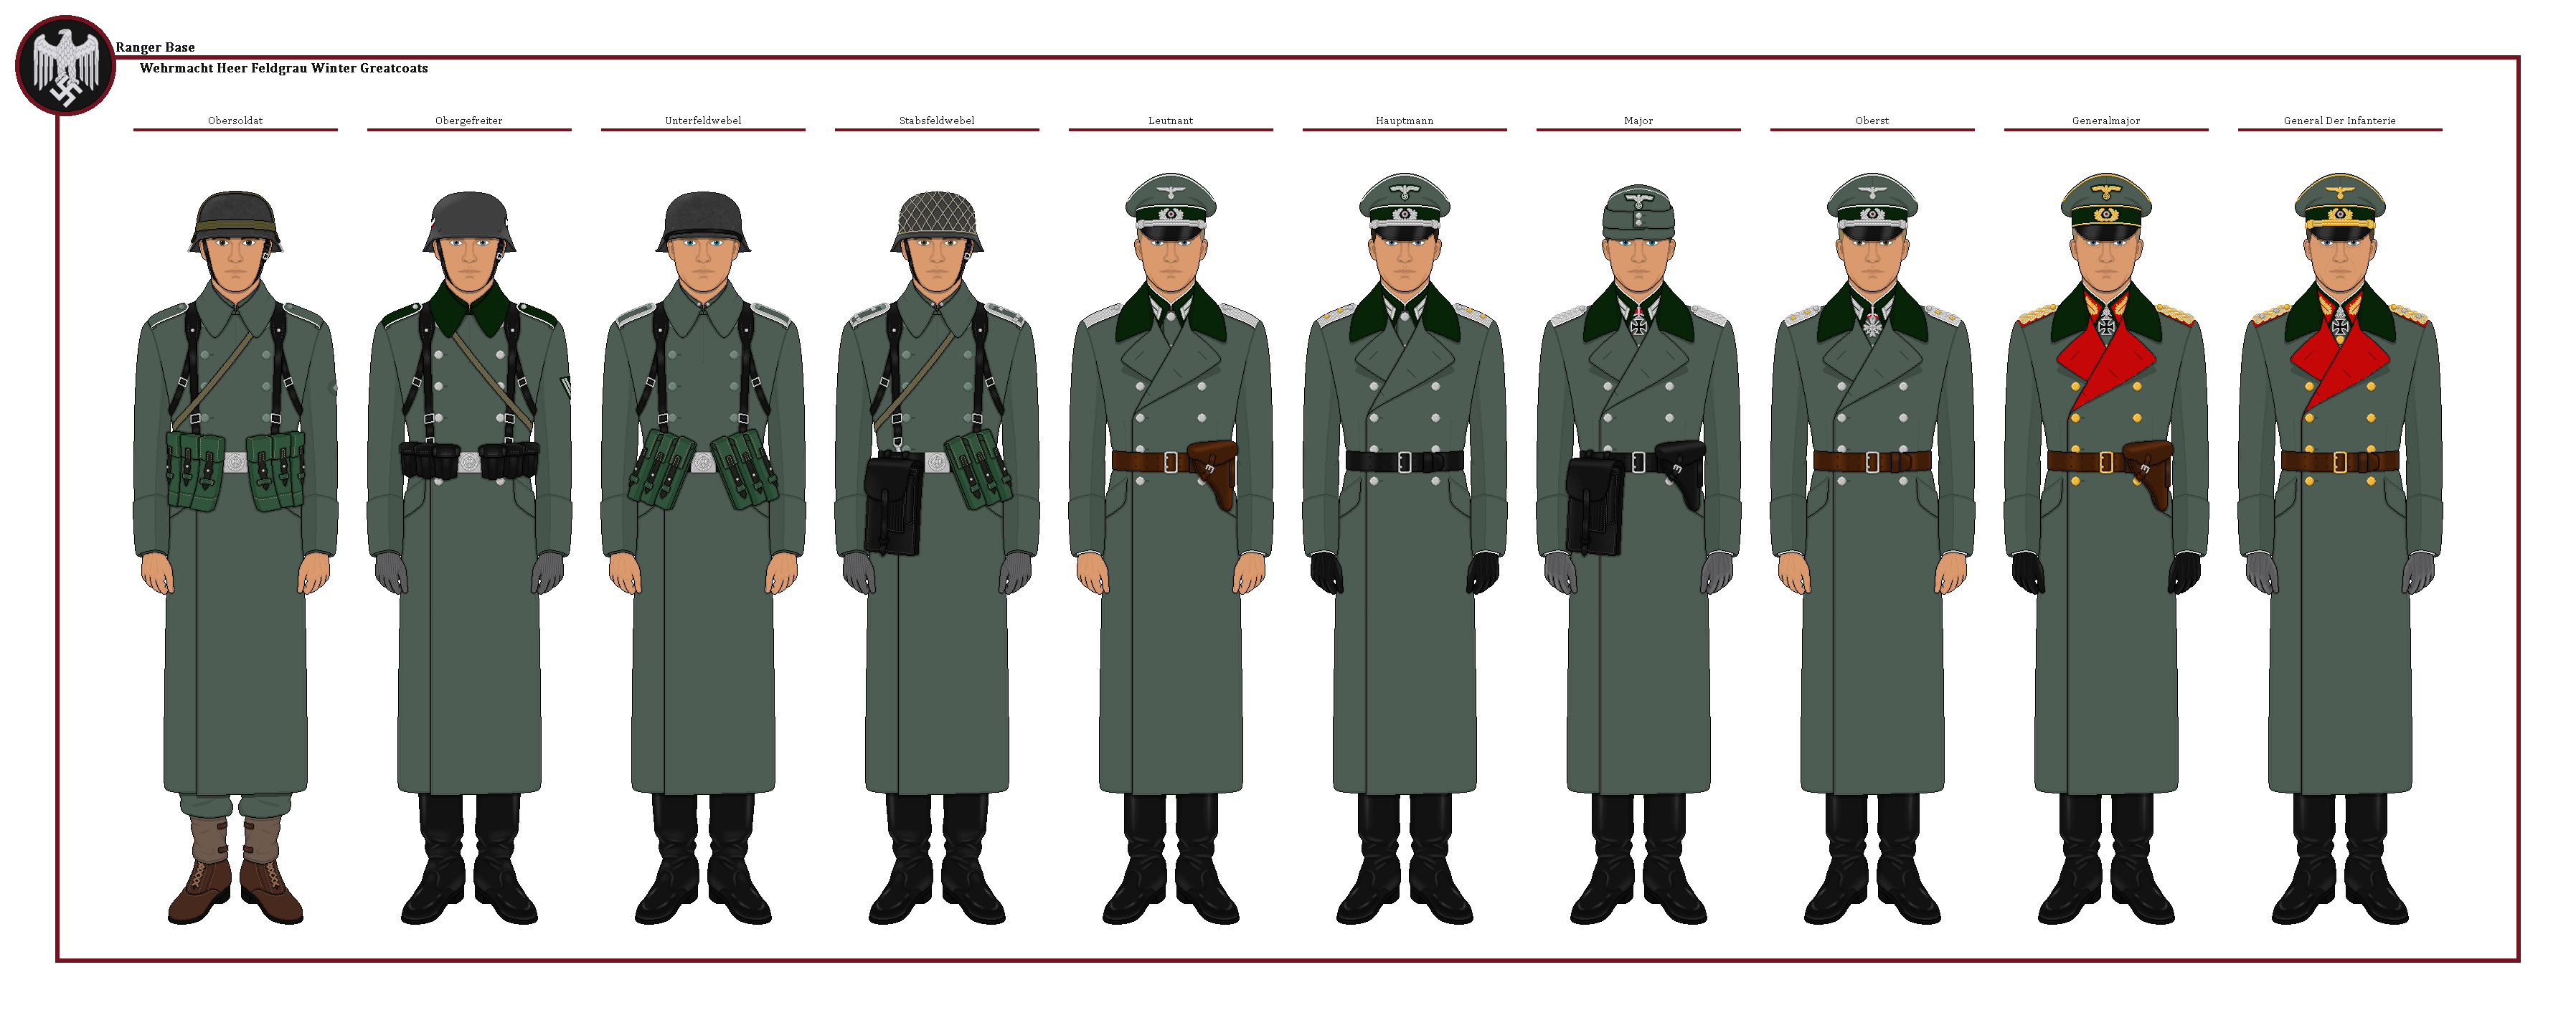 Wehrmacht Heer Feldgrau Greatcoats by TheRanger1302 on DeviantArt